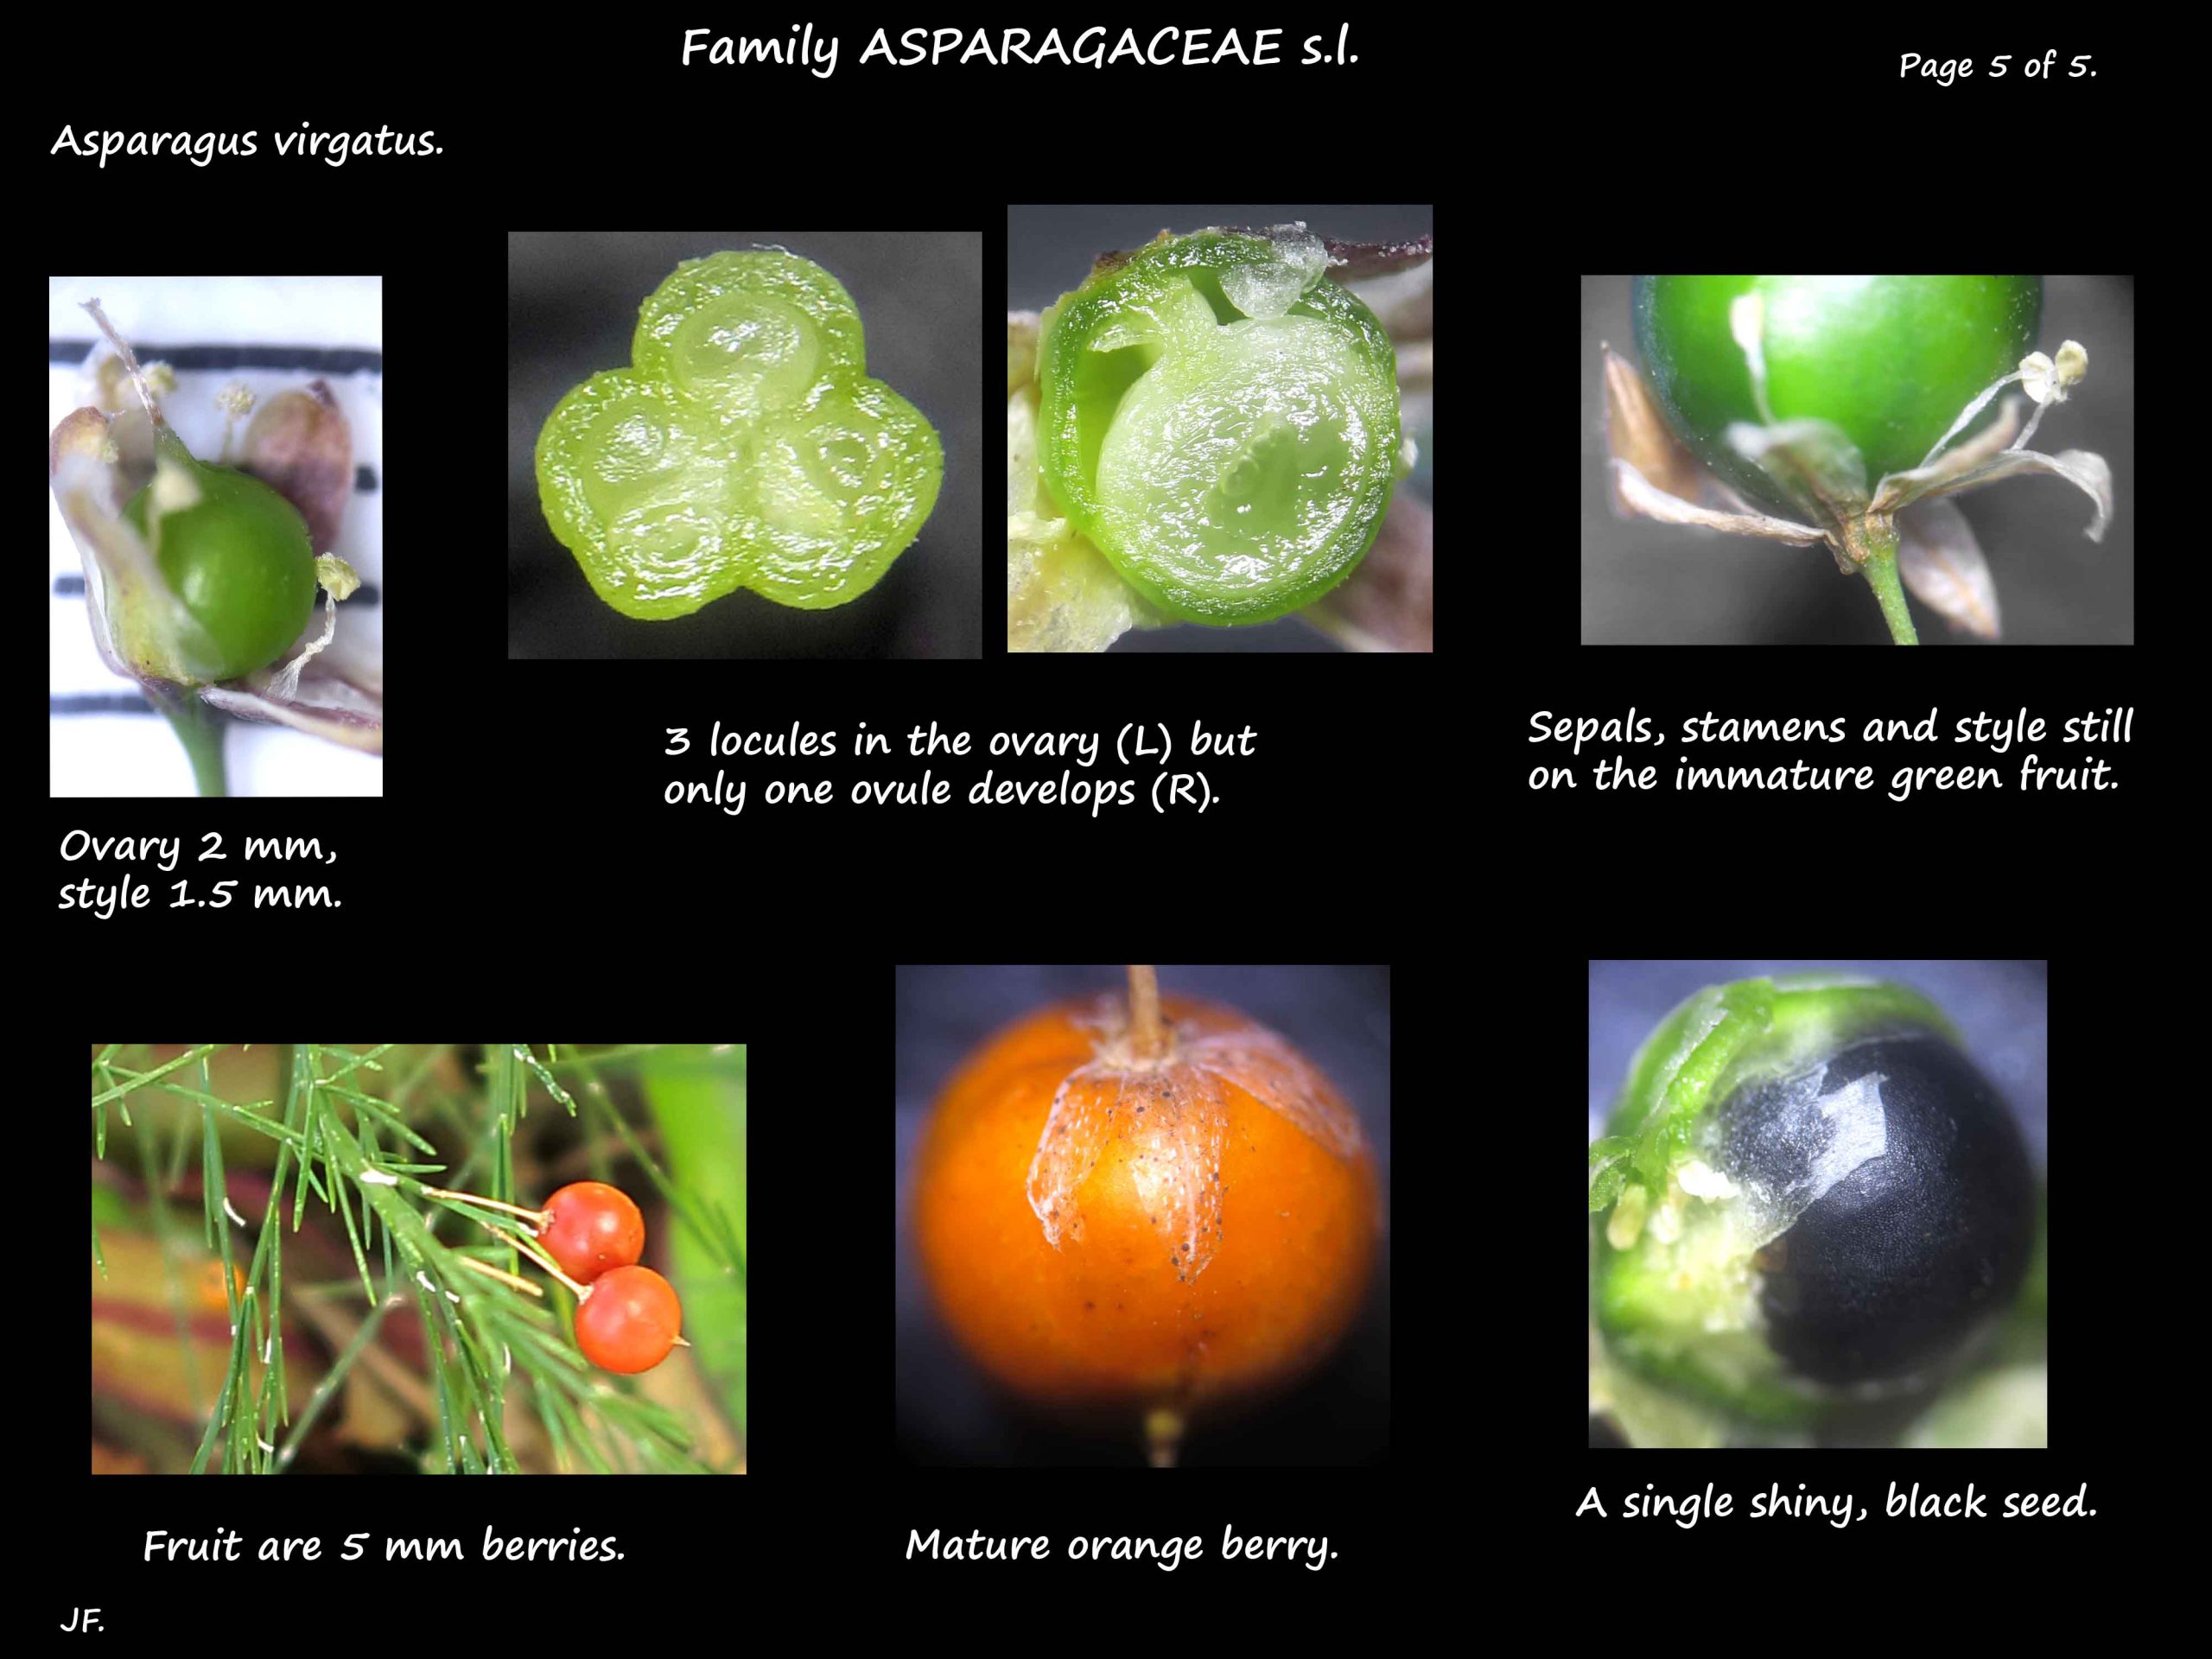 5 Asparagus virgatus fruit